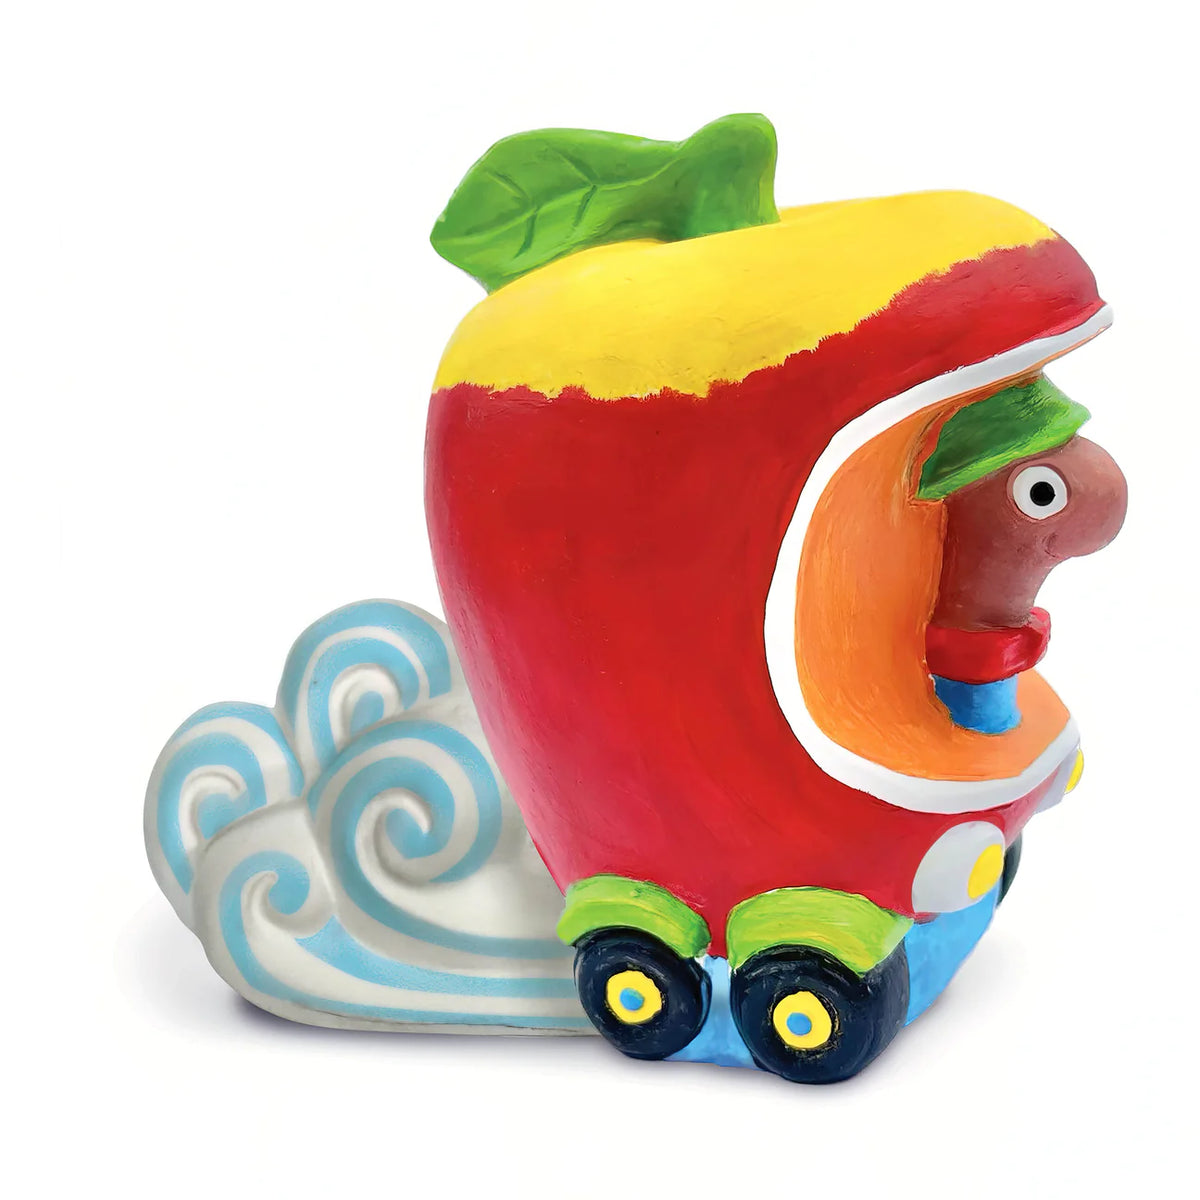 Paint a Racer: Apple Car Cover